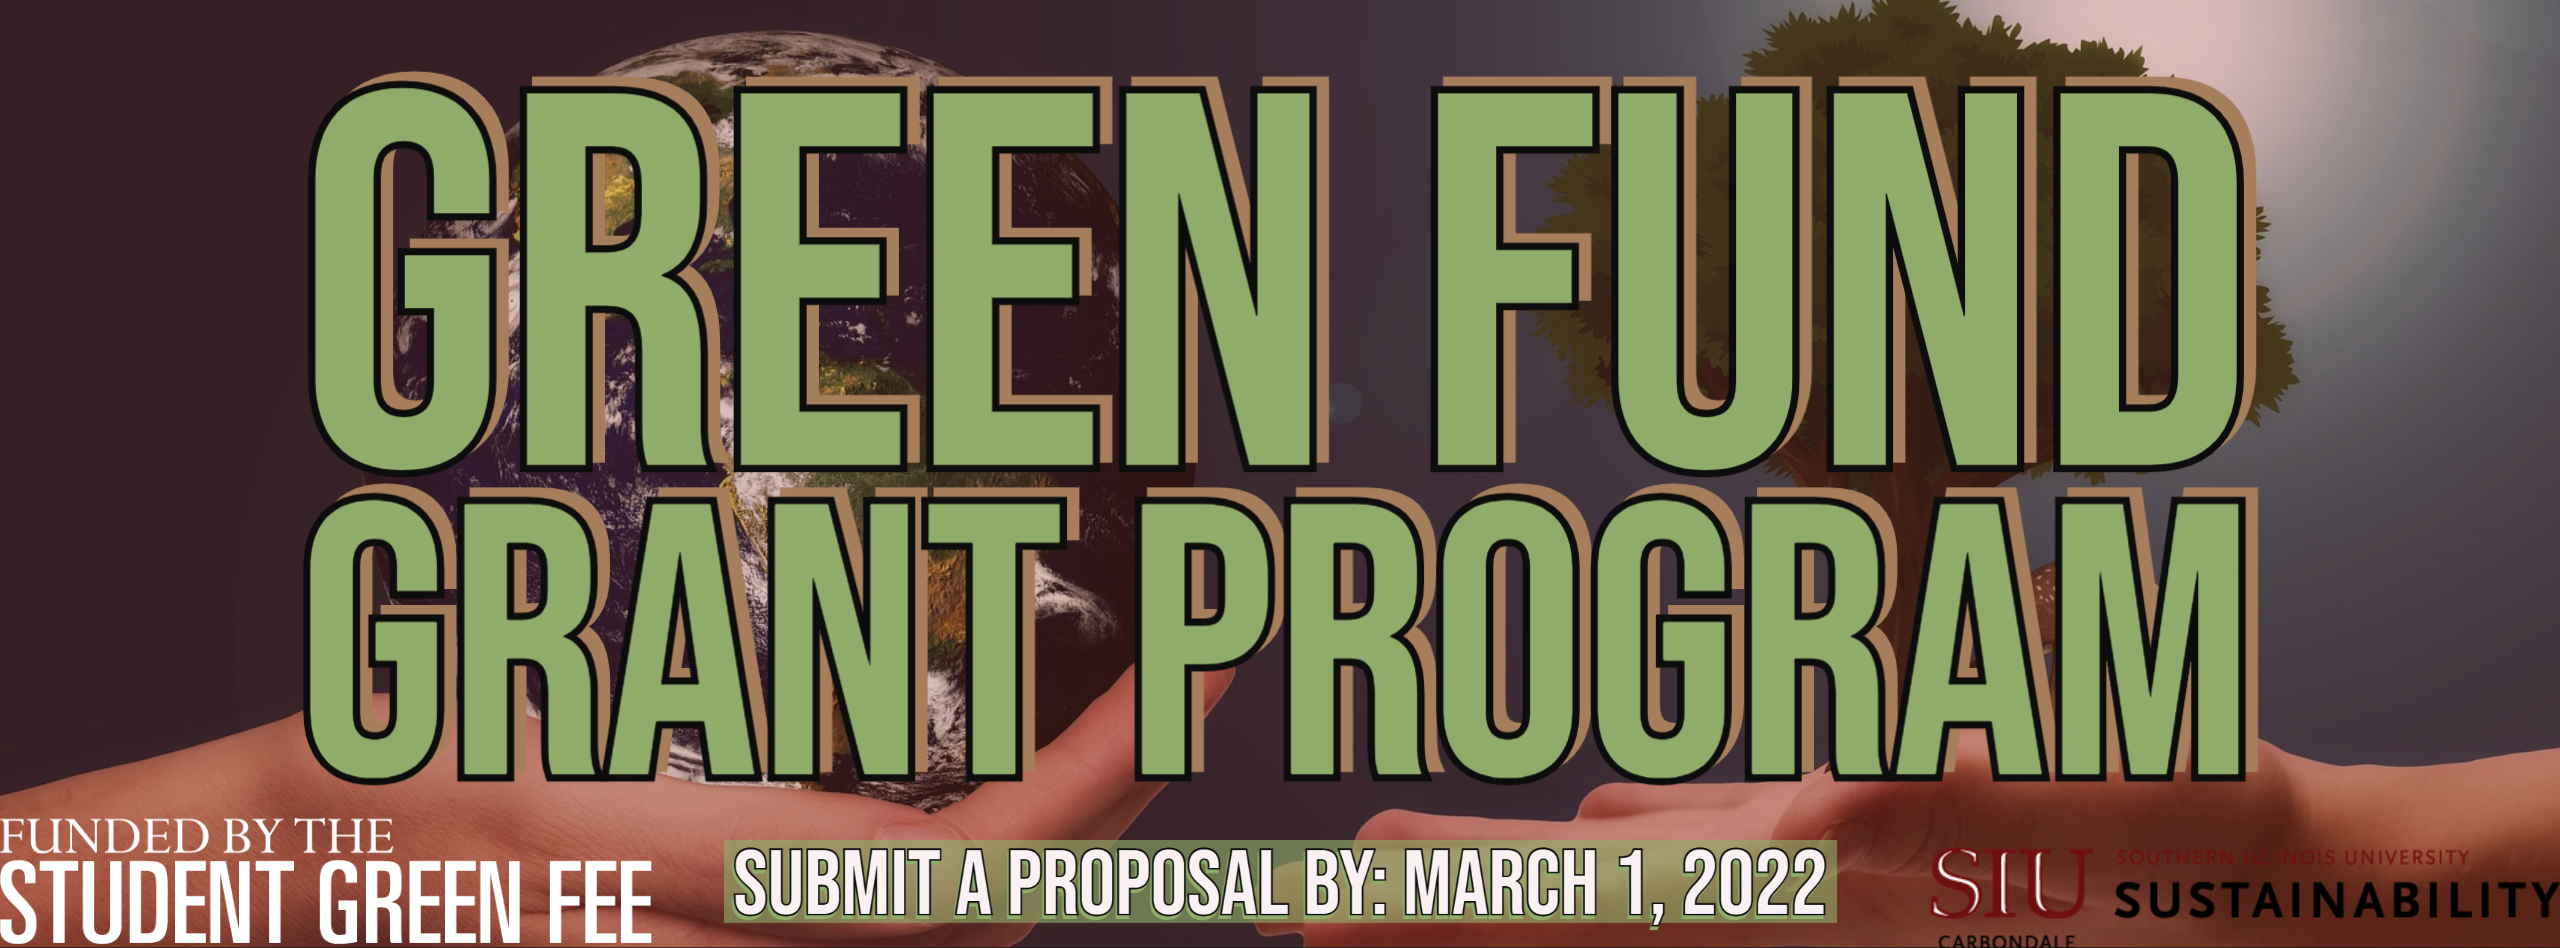 Green Grant Fund Program